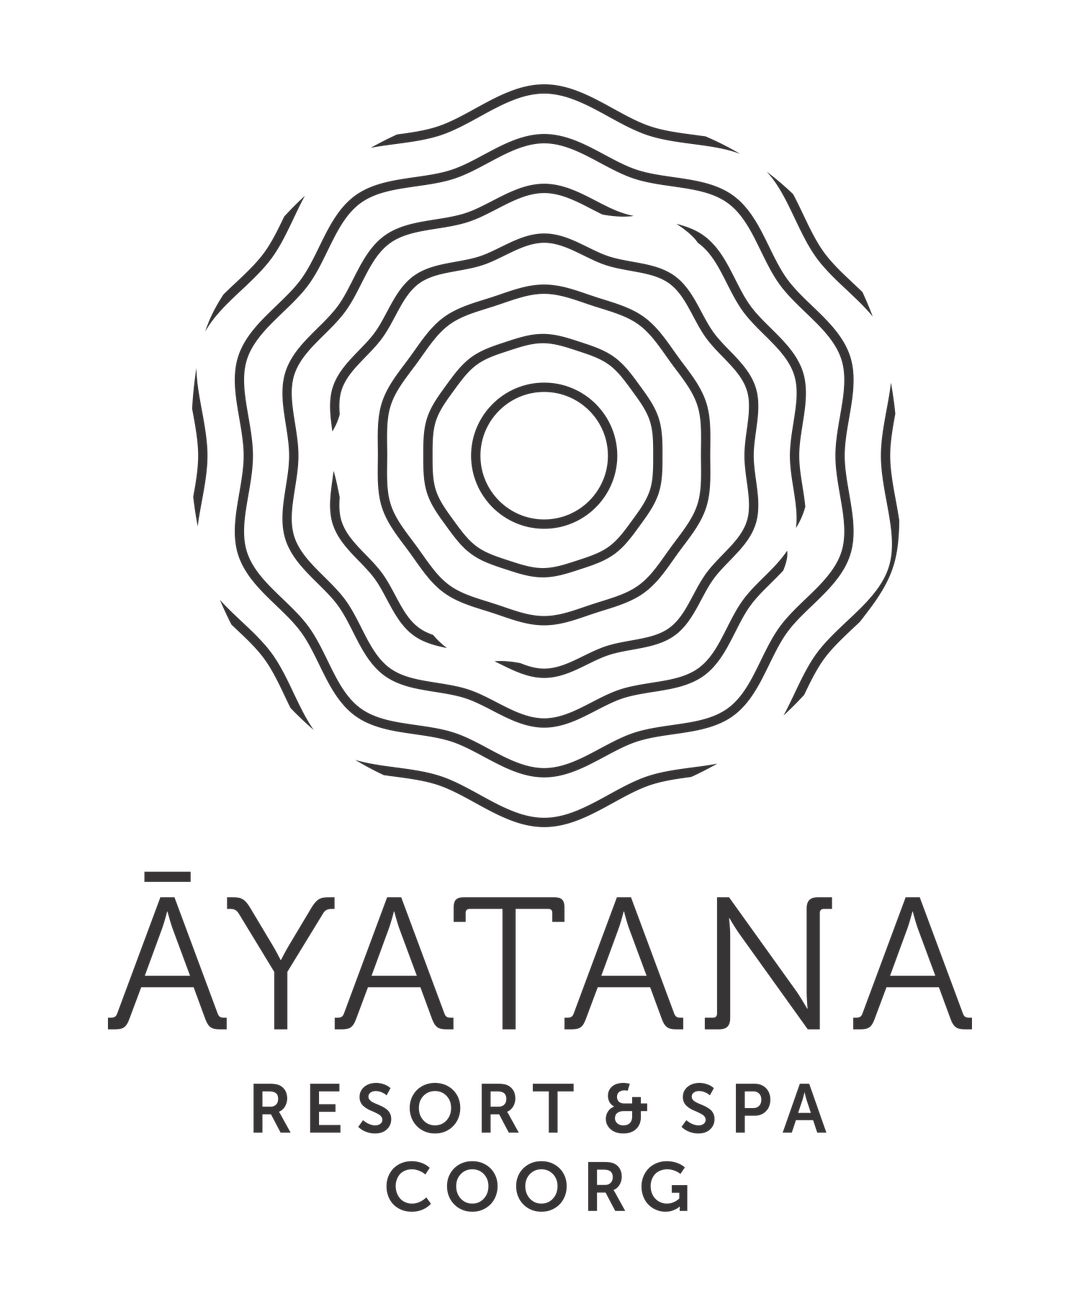 Ayatana Resort & Spa - Coorg Logo 2019 x Okay Done Media partnership